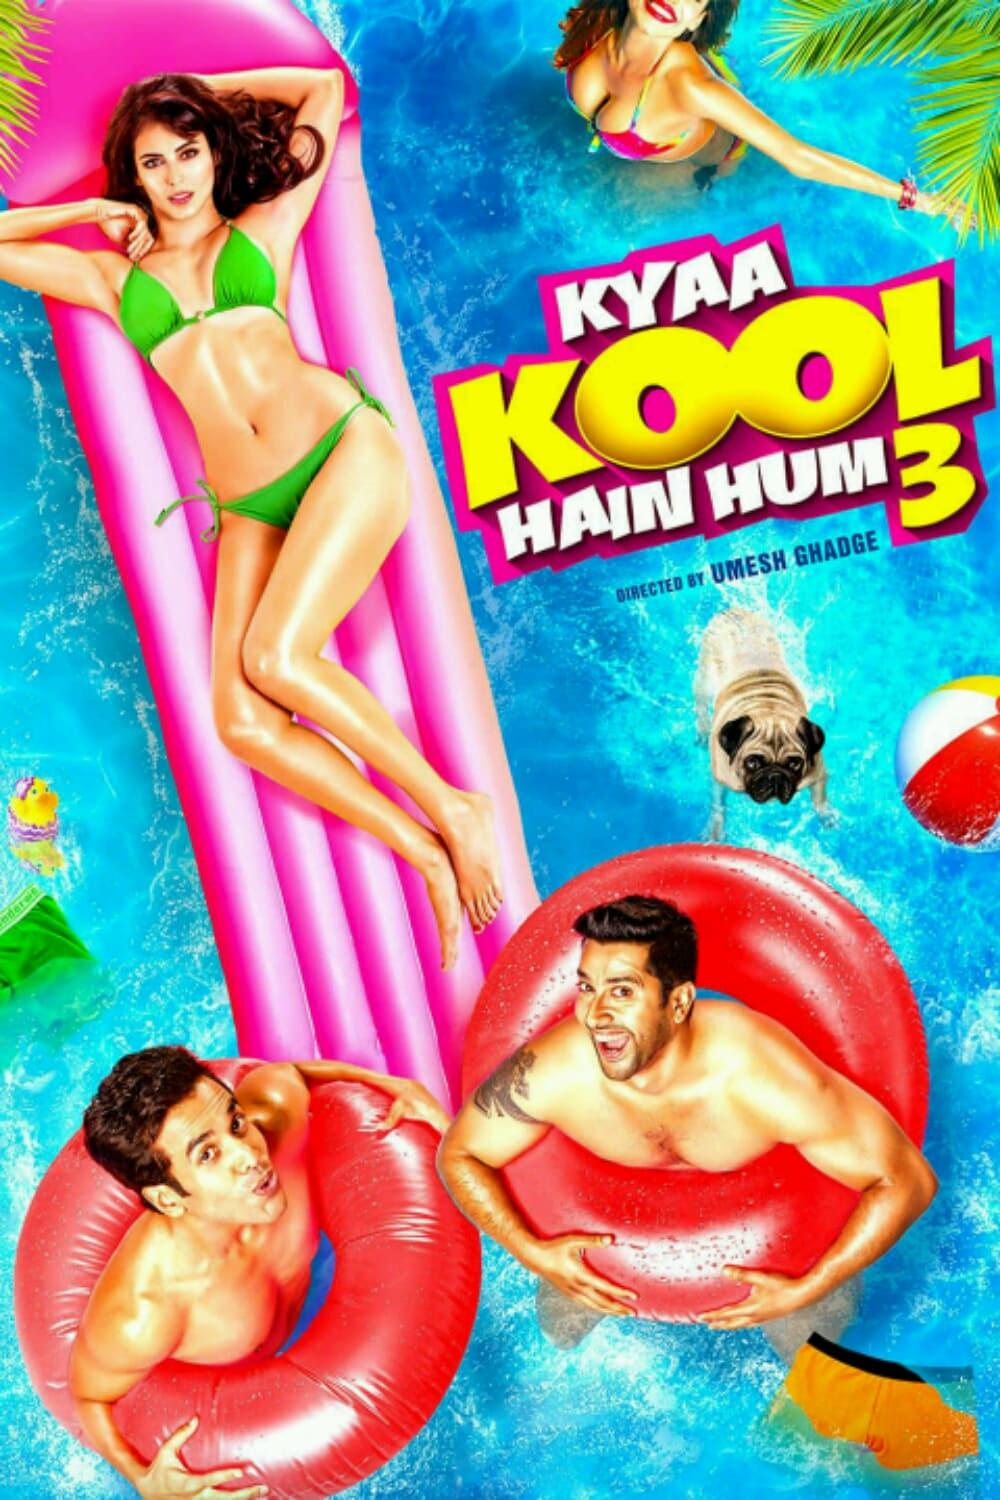 Kyaa Kool Hain Hum 3 poster